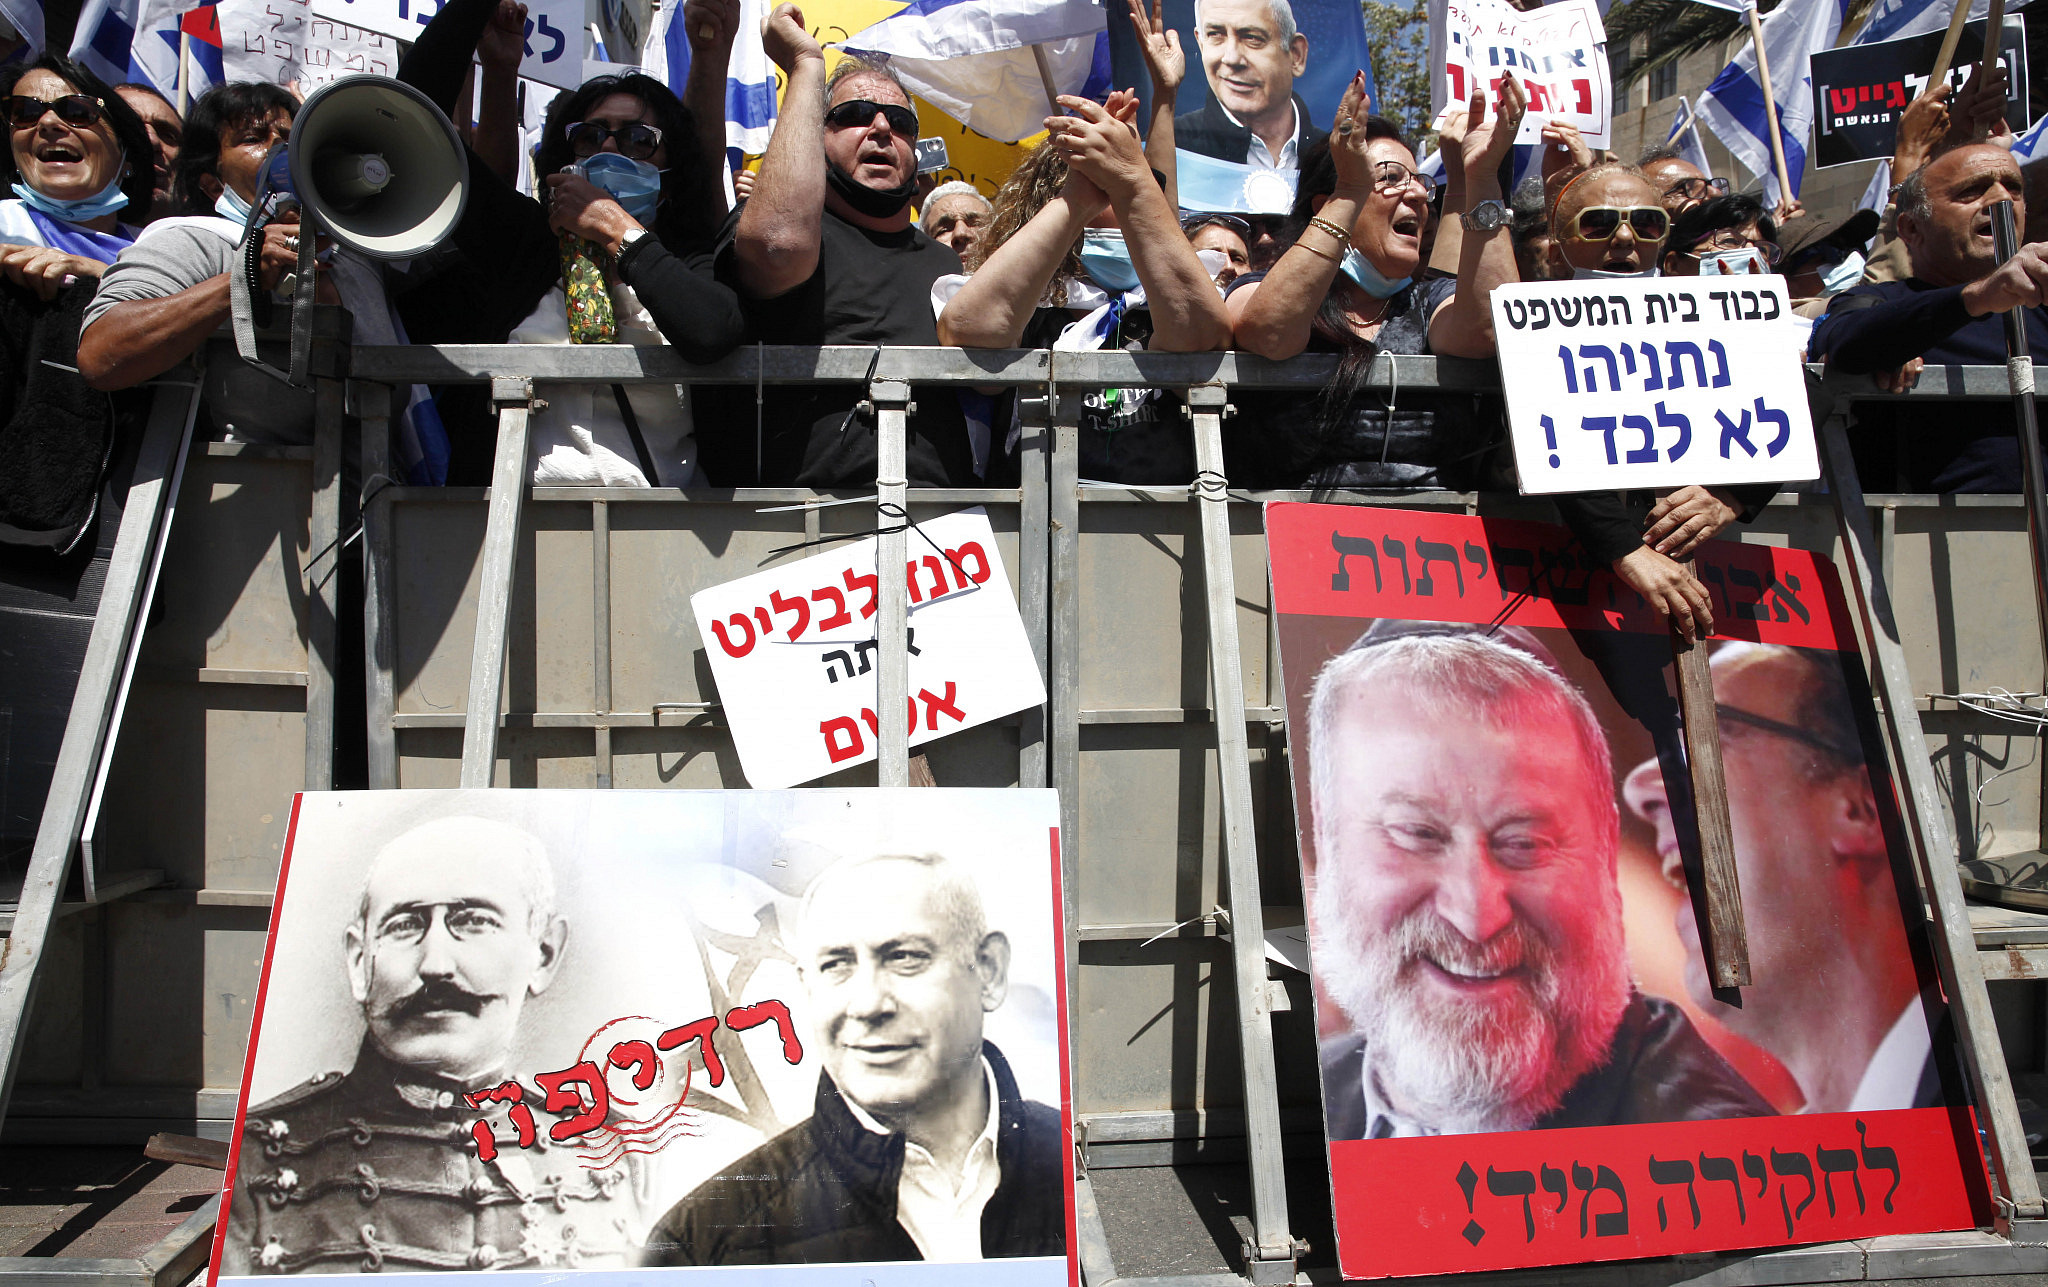 PHOTO ESSAY - PM Netanyahu's trial, begun | Ariel Jerozolimski | The Blogs